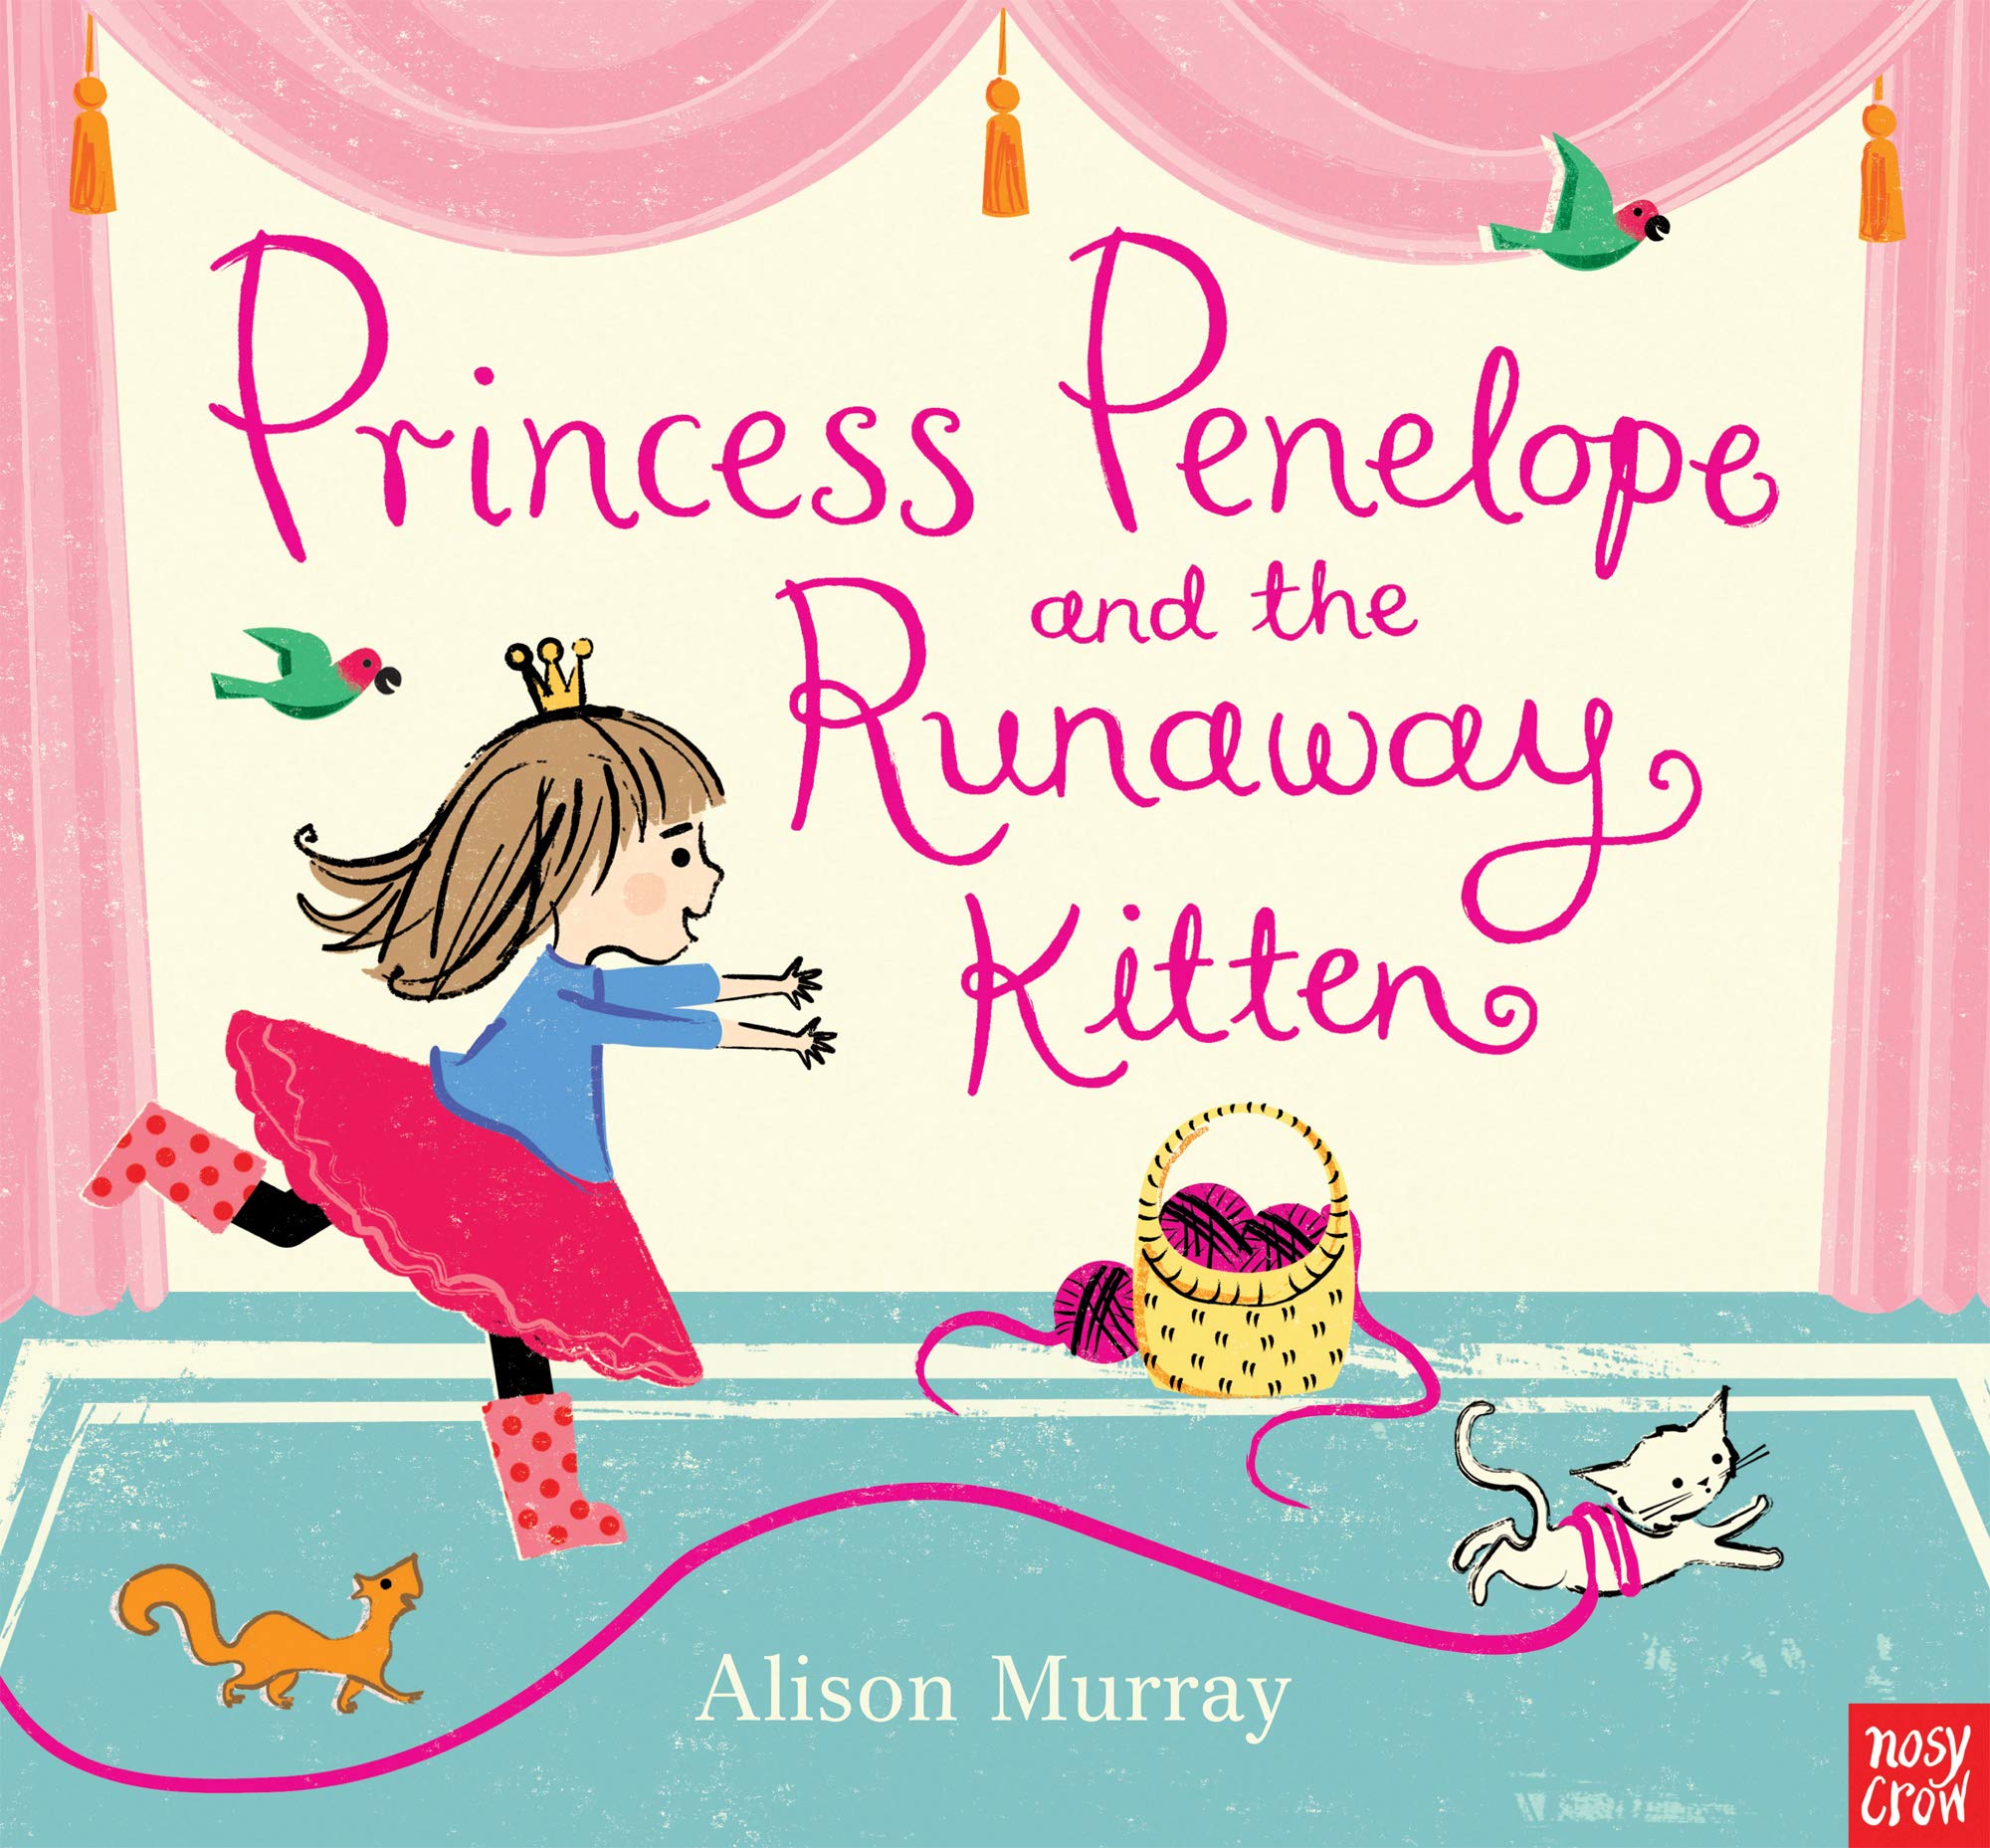 IMG : Princess Penelope & the Runaway Kitten